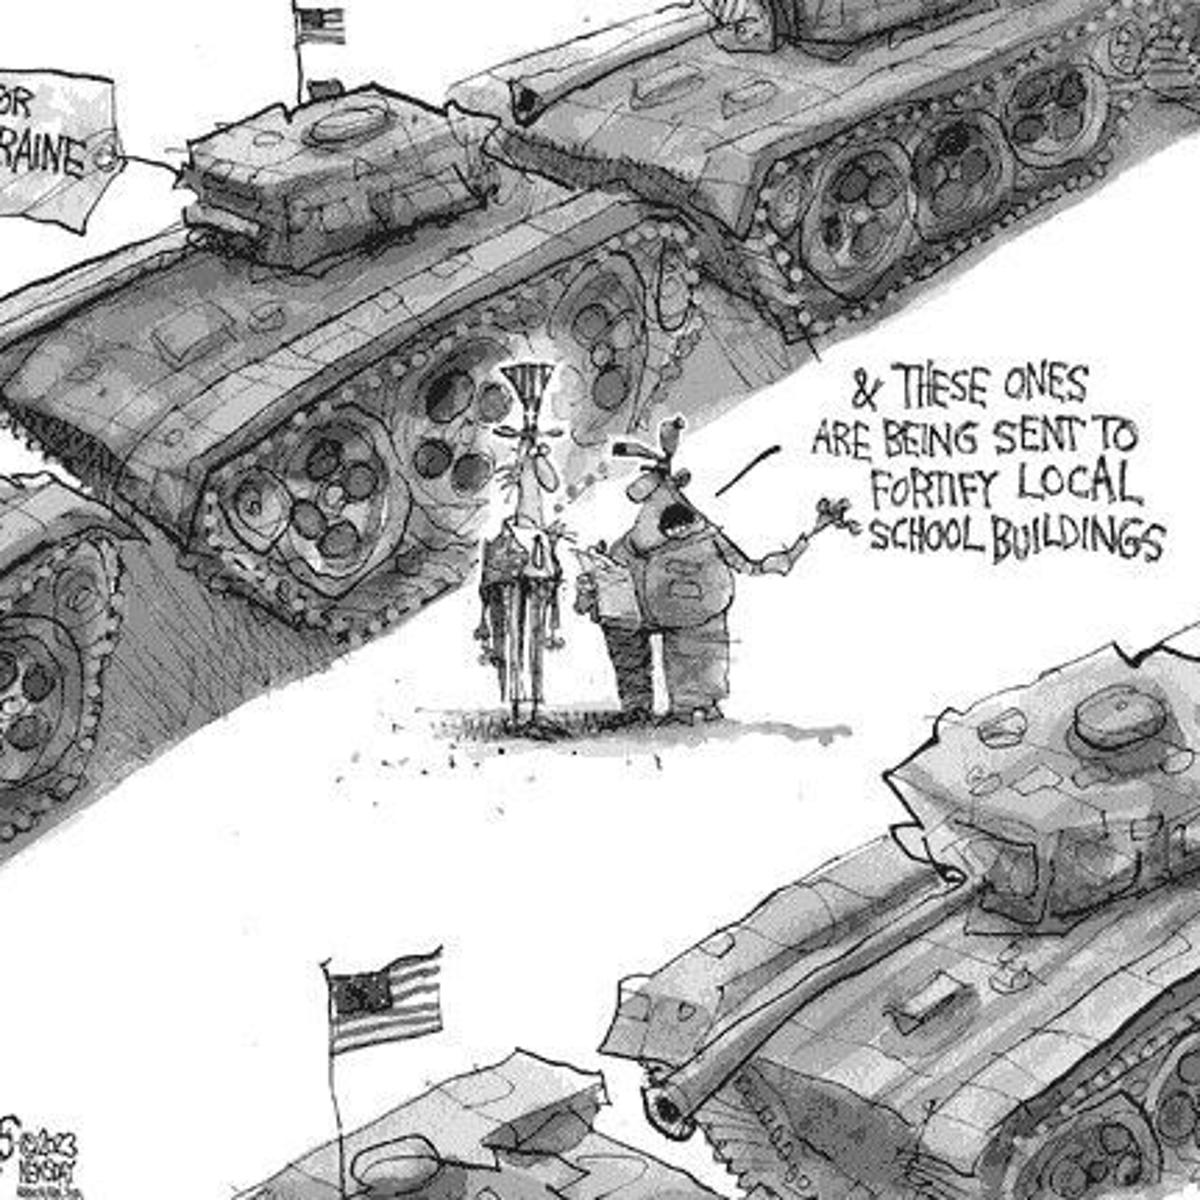 Editorial Cartoon: Tanks | Editorial 